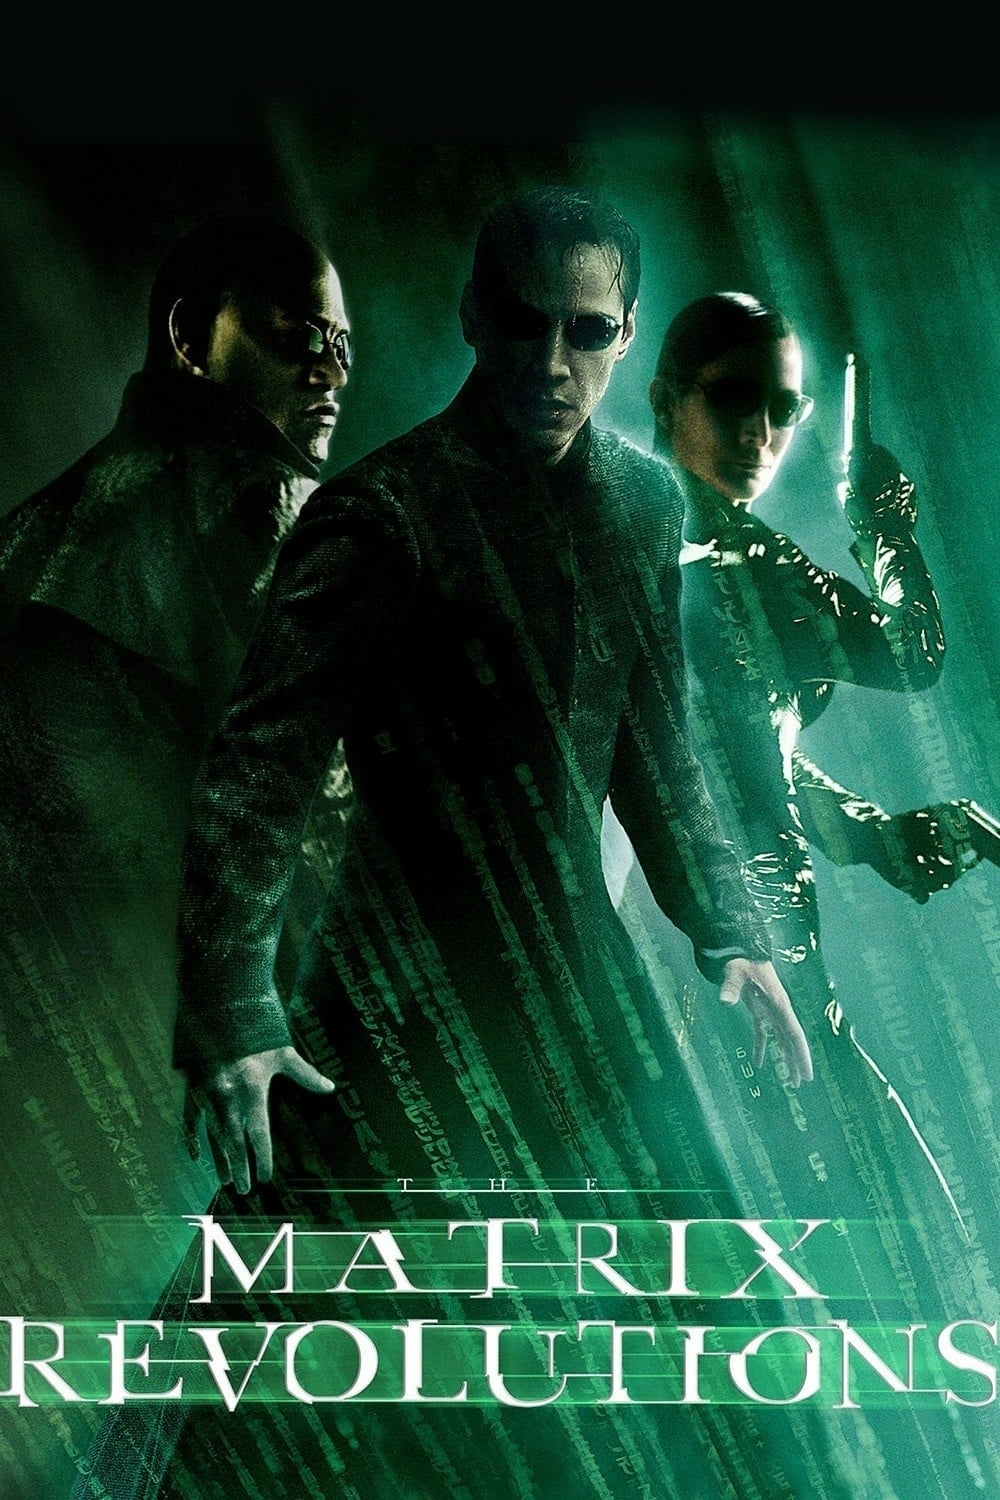 Ma Trận: Cuộc Cách Mạng (The Matrix Revolutions) [2003]